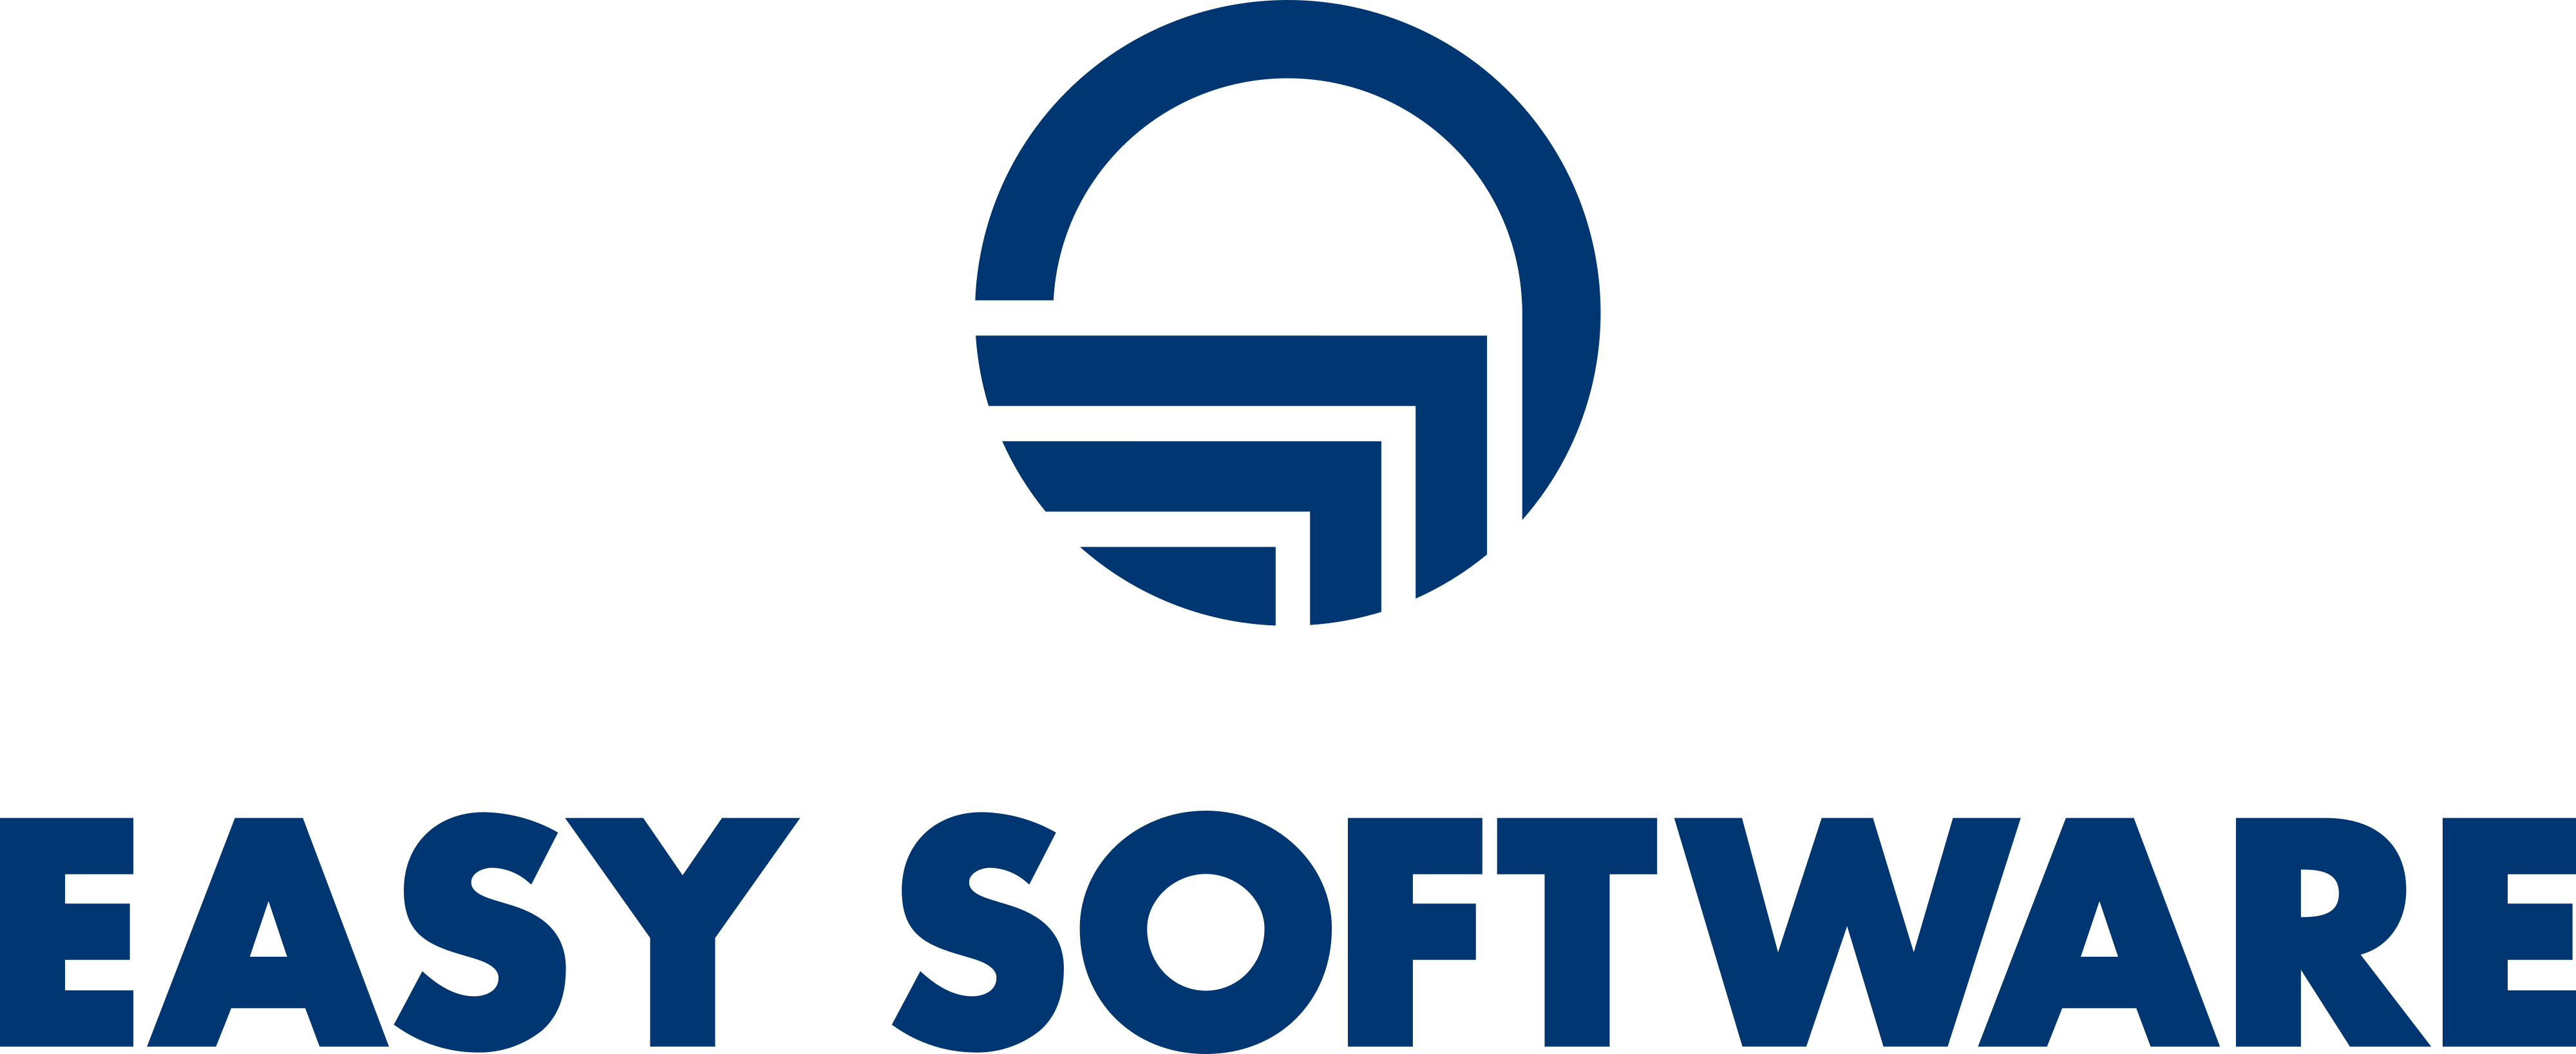 Easy Software logo - download.